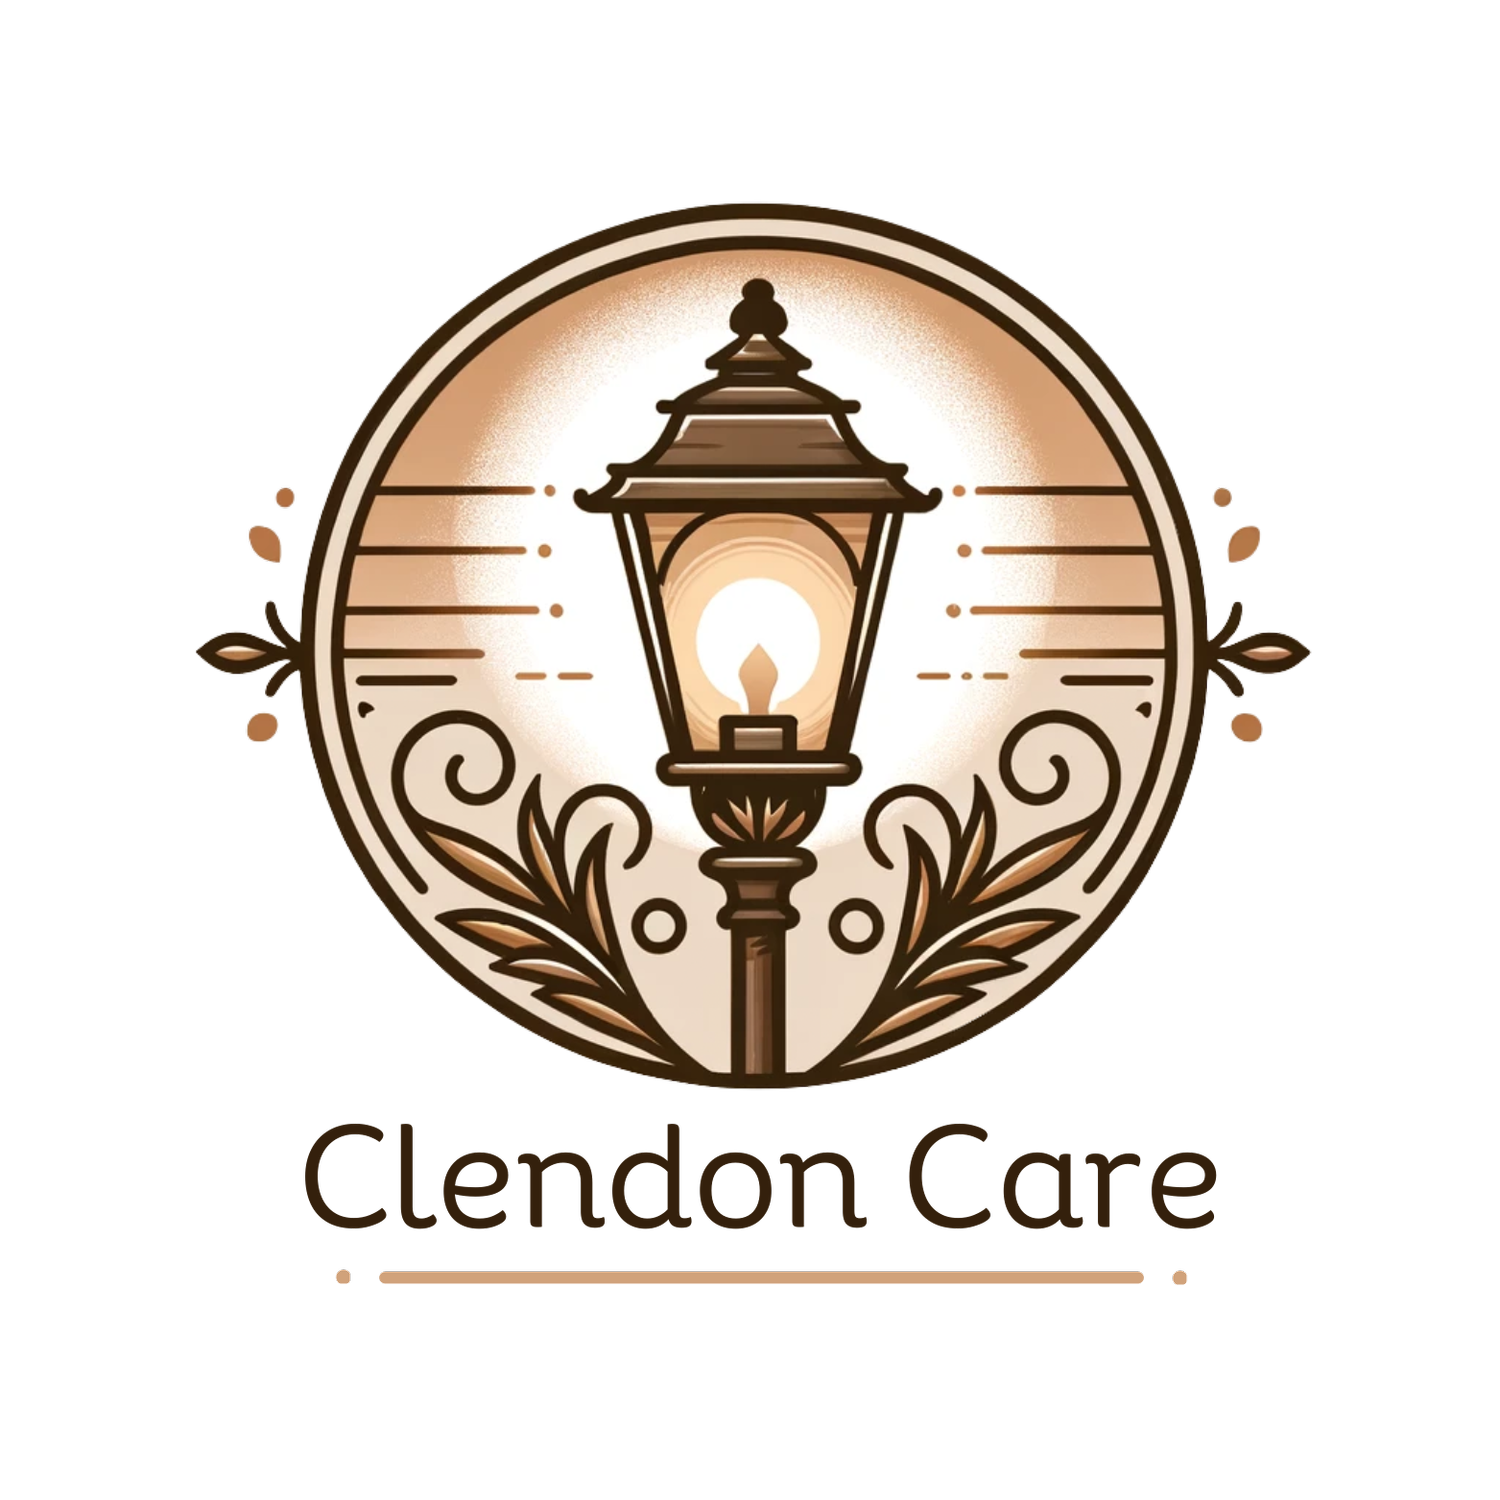 Clendon Care